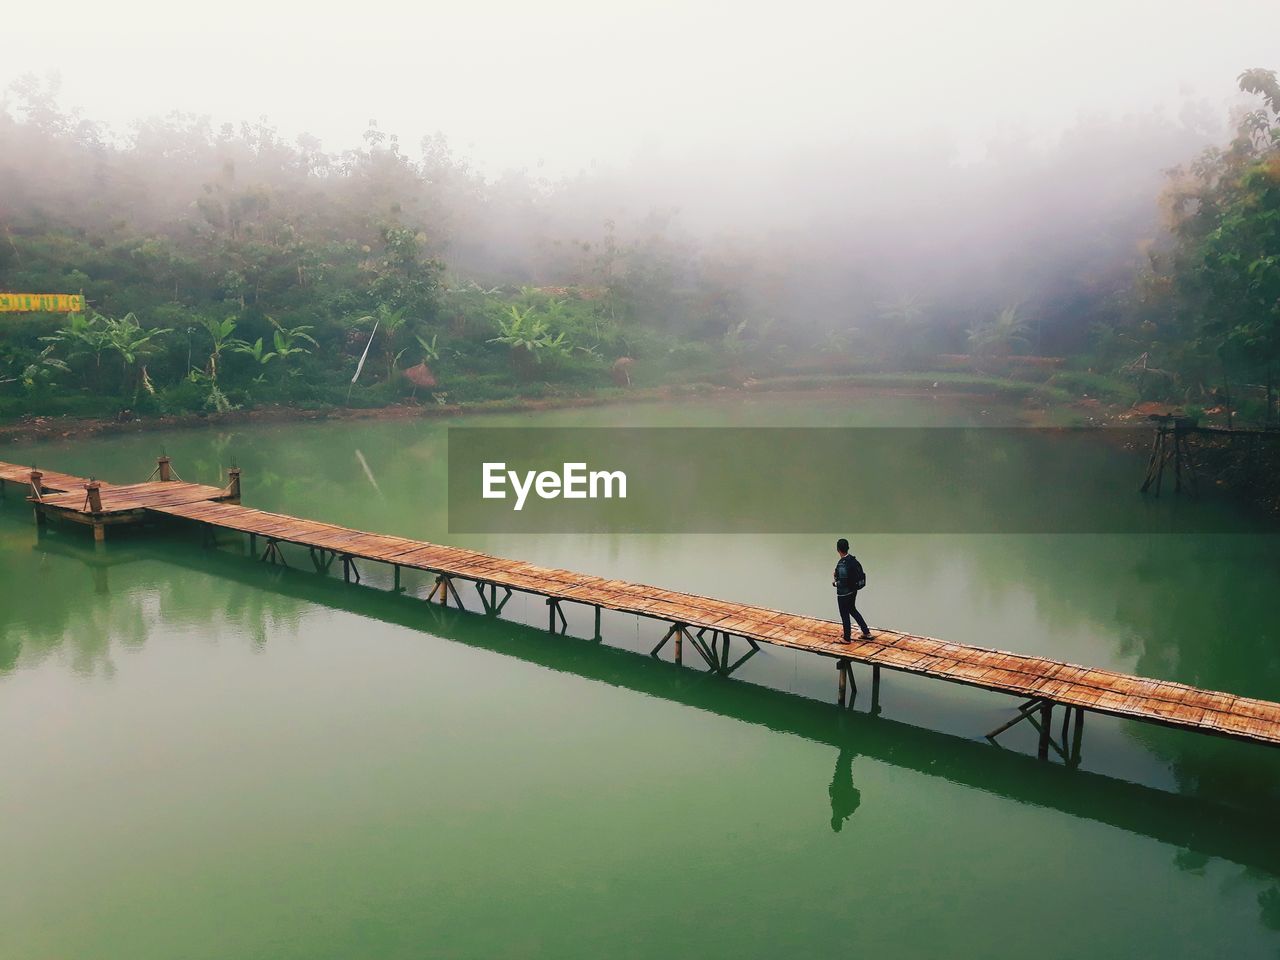 Person walking on footbridge over lake